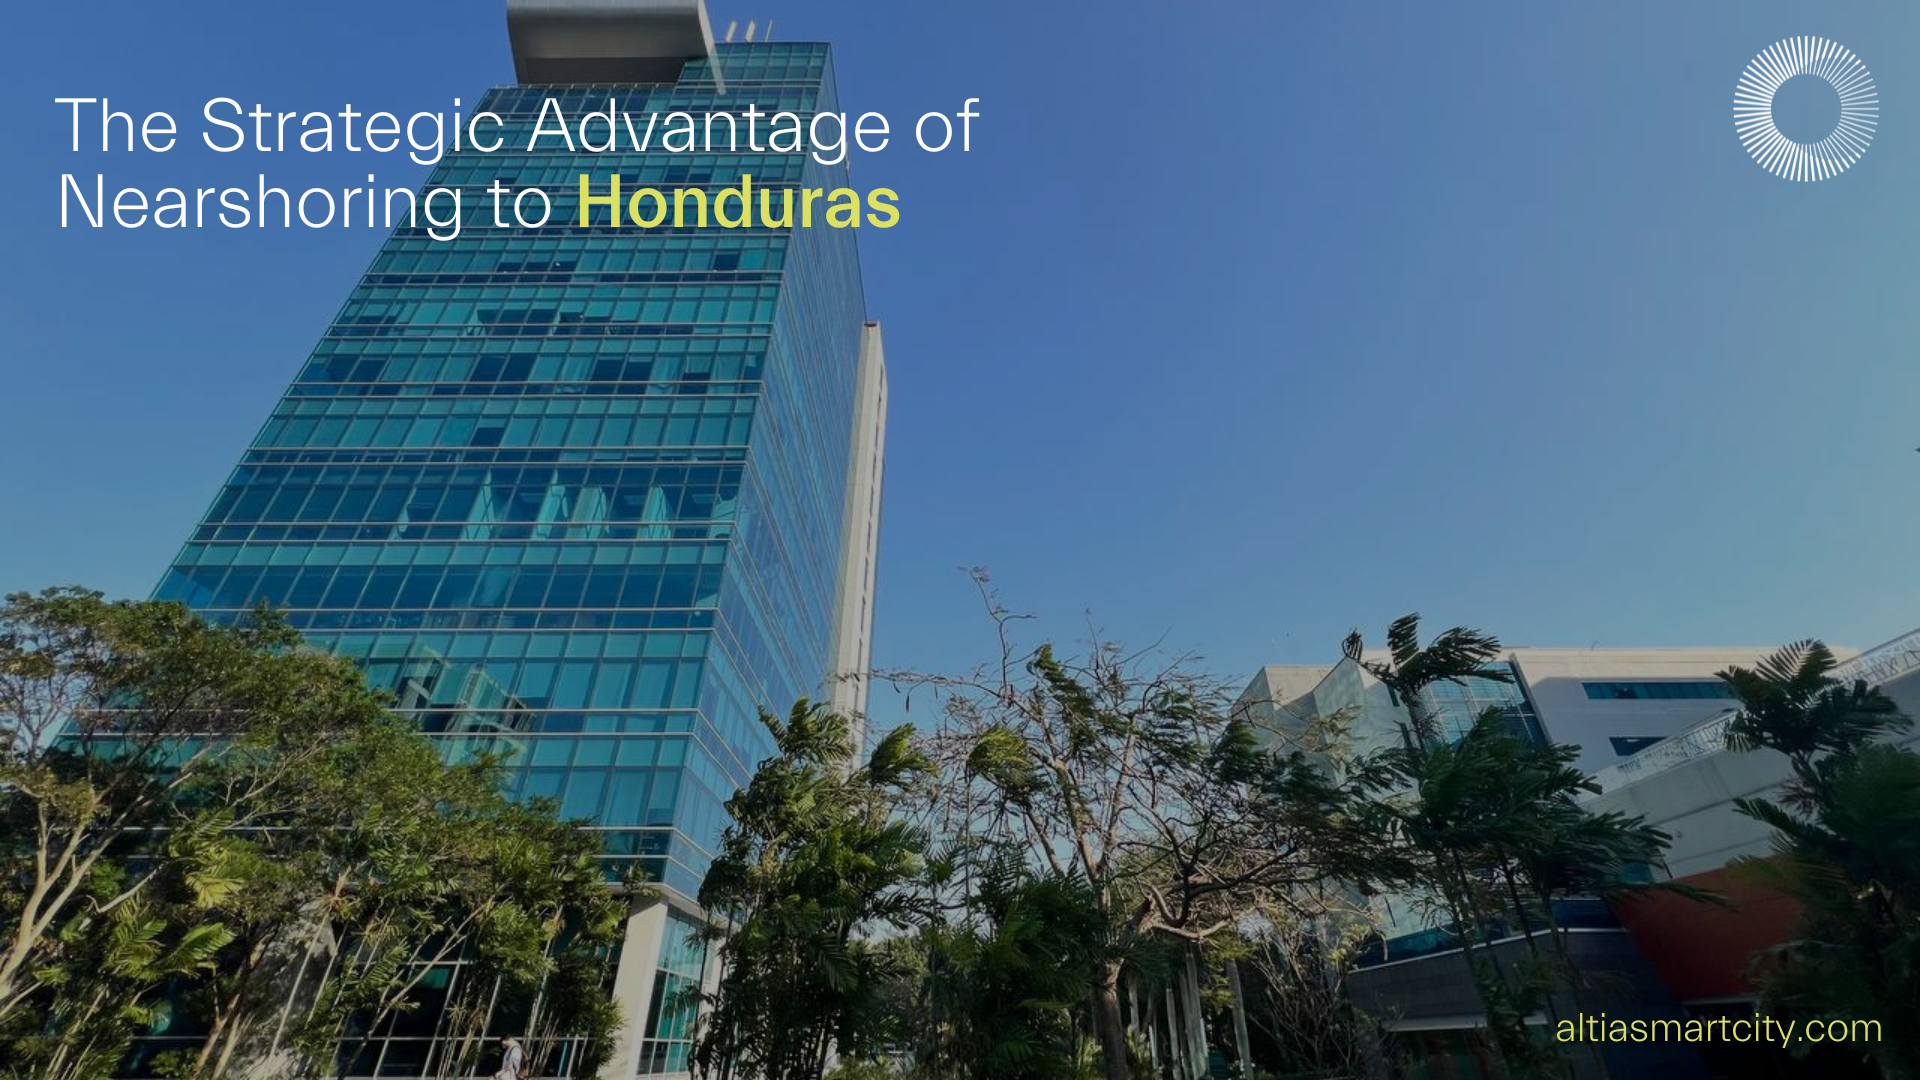 The Strategic Advantage of Nearshoring to Honduras